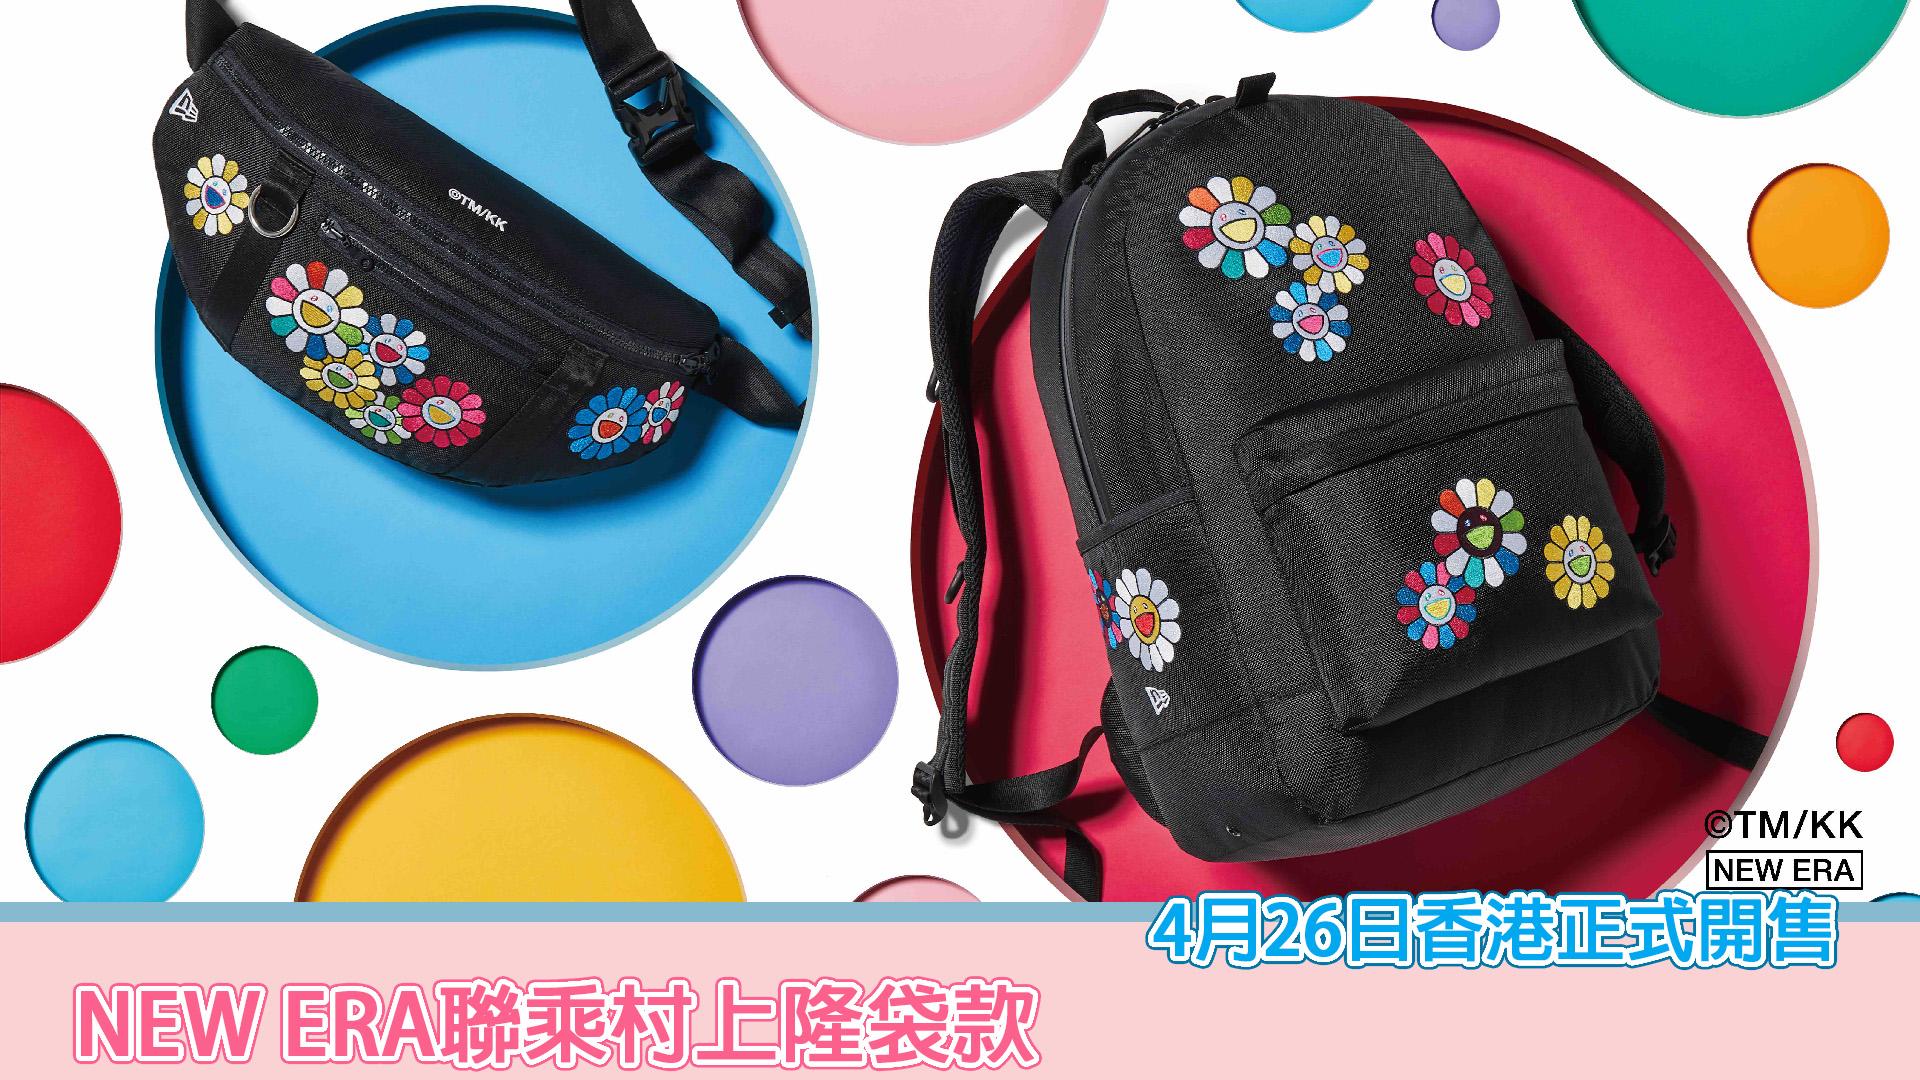 NEW ERA聯乘村上隆袋款4月26日香港正式開售– Sesame Note 芝麻筆記